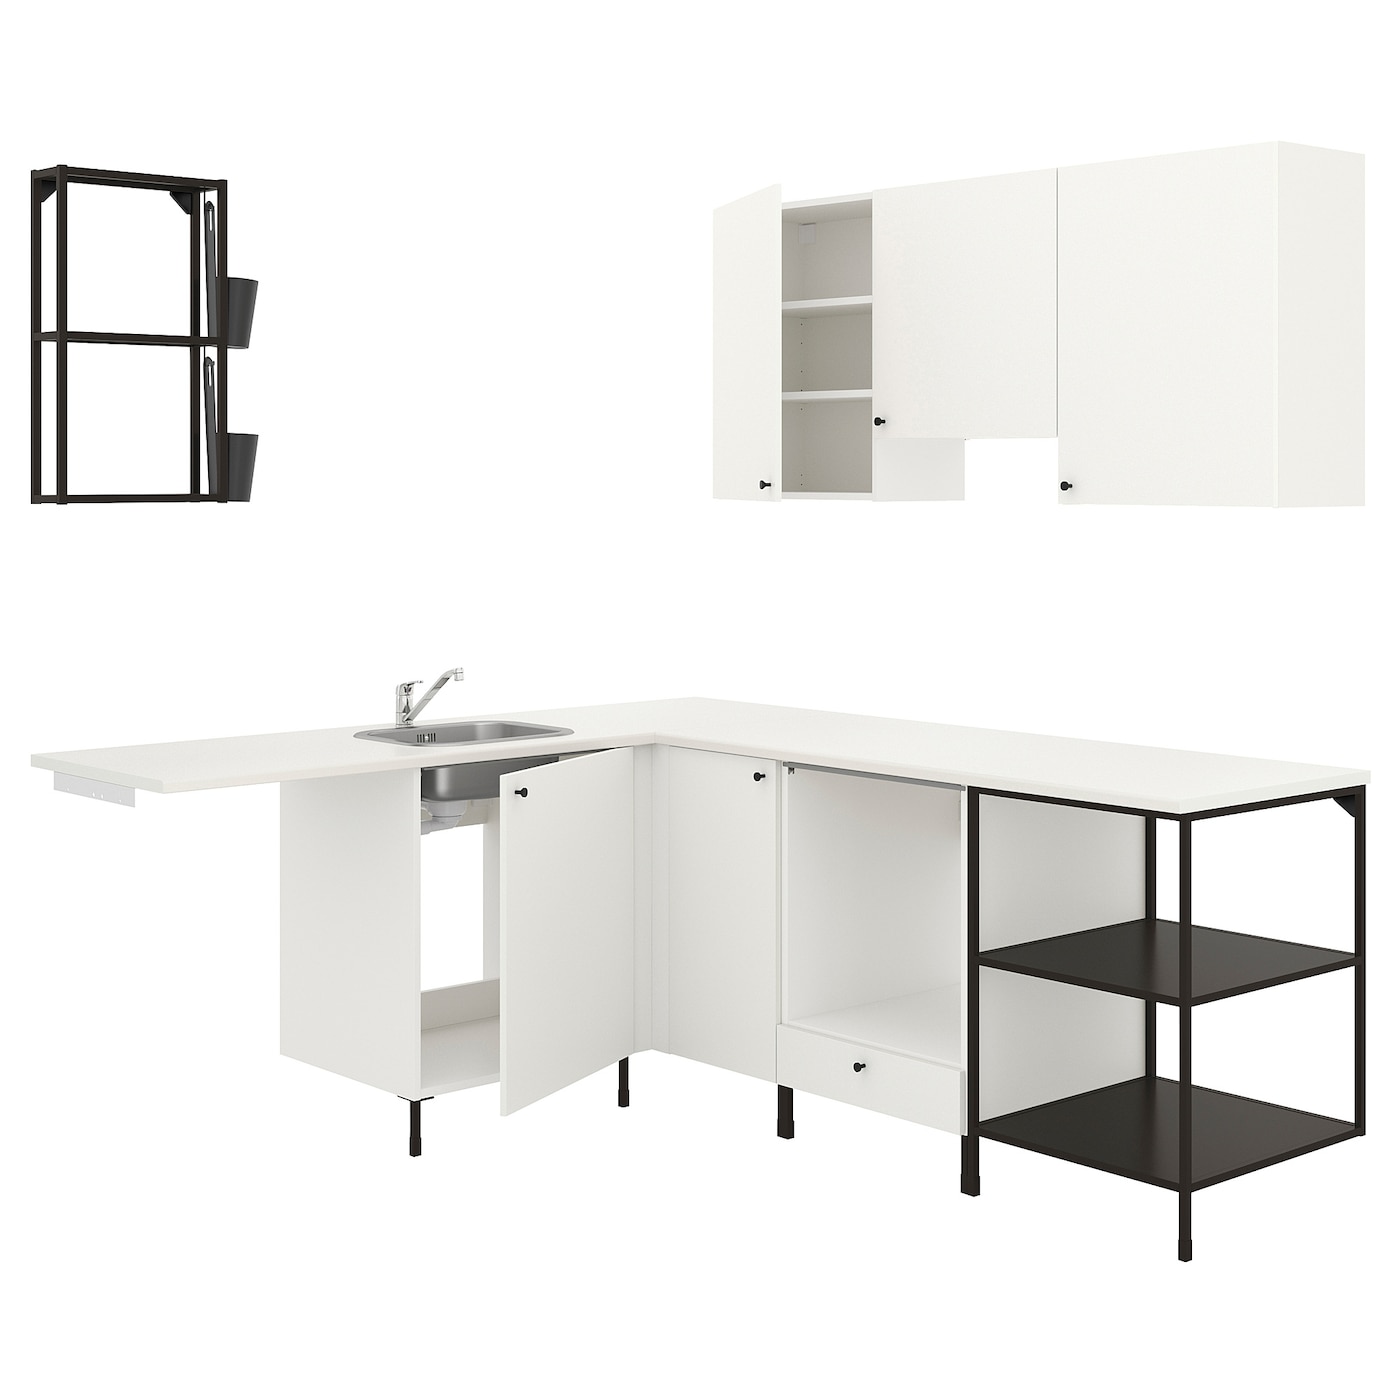 Угловая кухня -  ENHET  IKEA/ ЭНХЕТ ИКЕА, 228,5х75 см, белый/черный